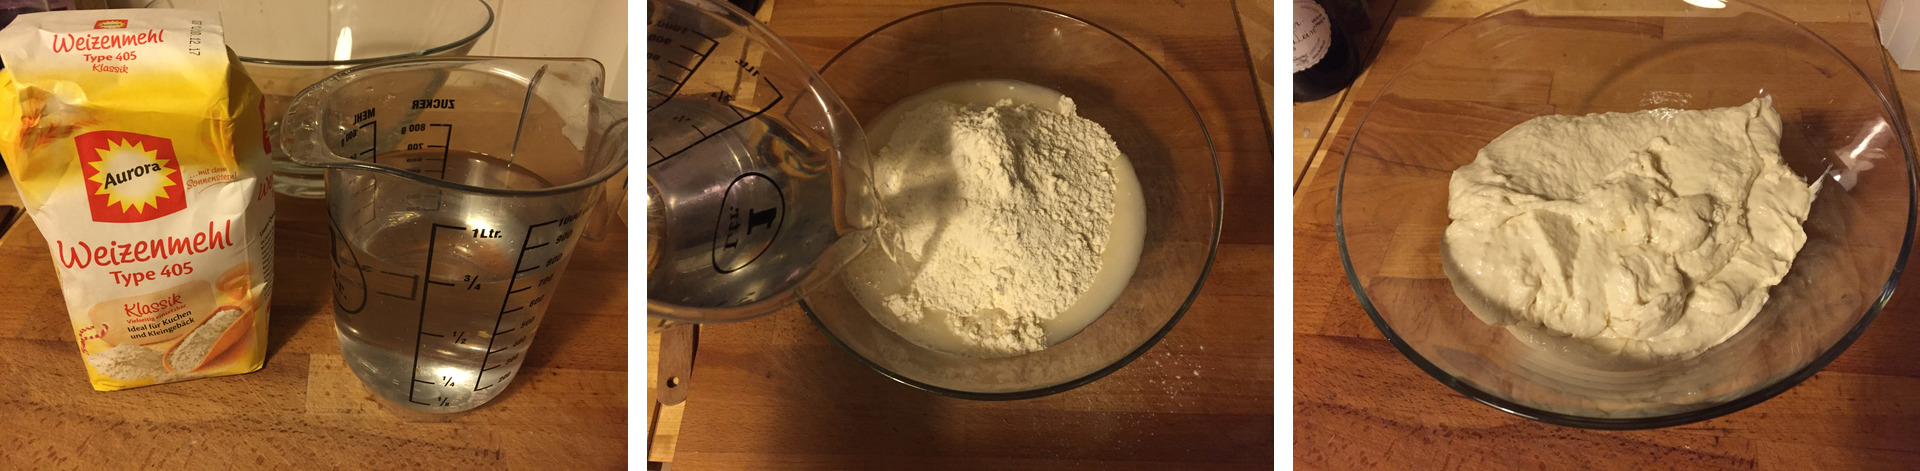 Preparation of the base dough